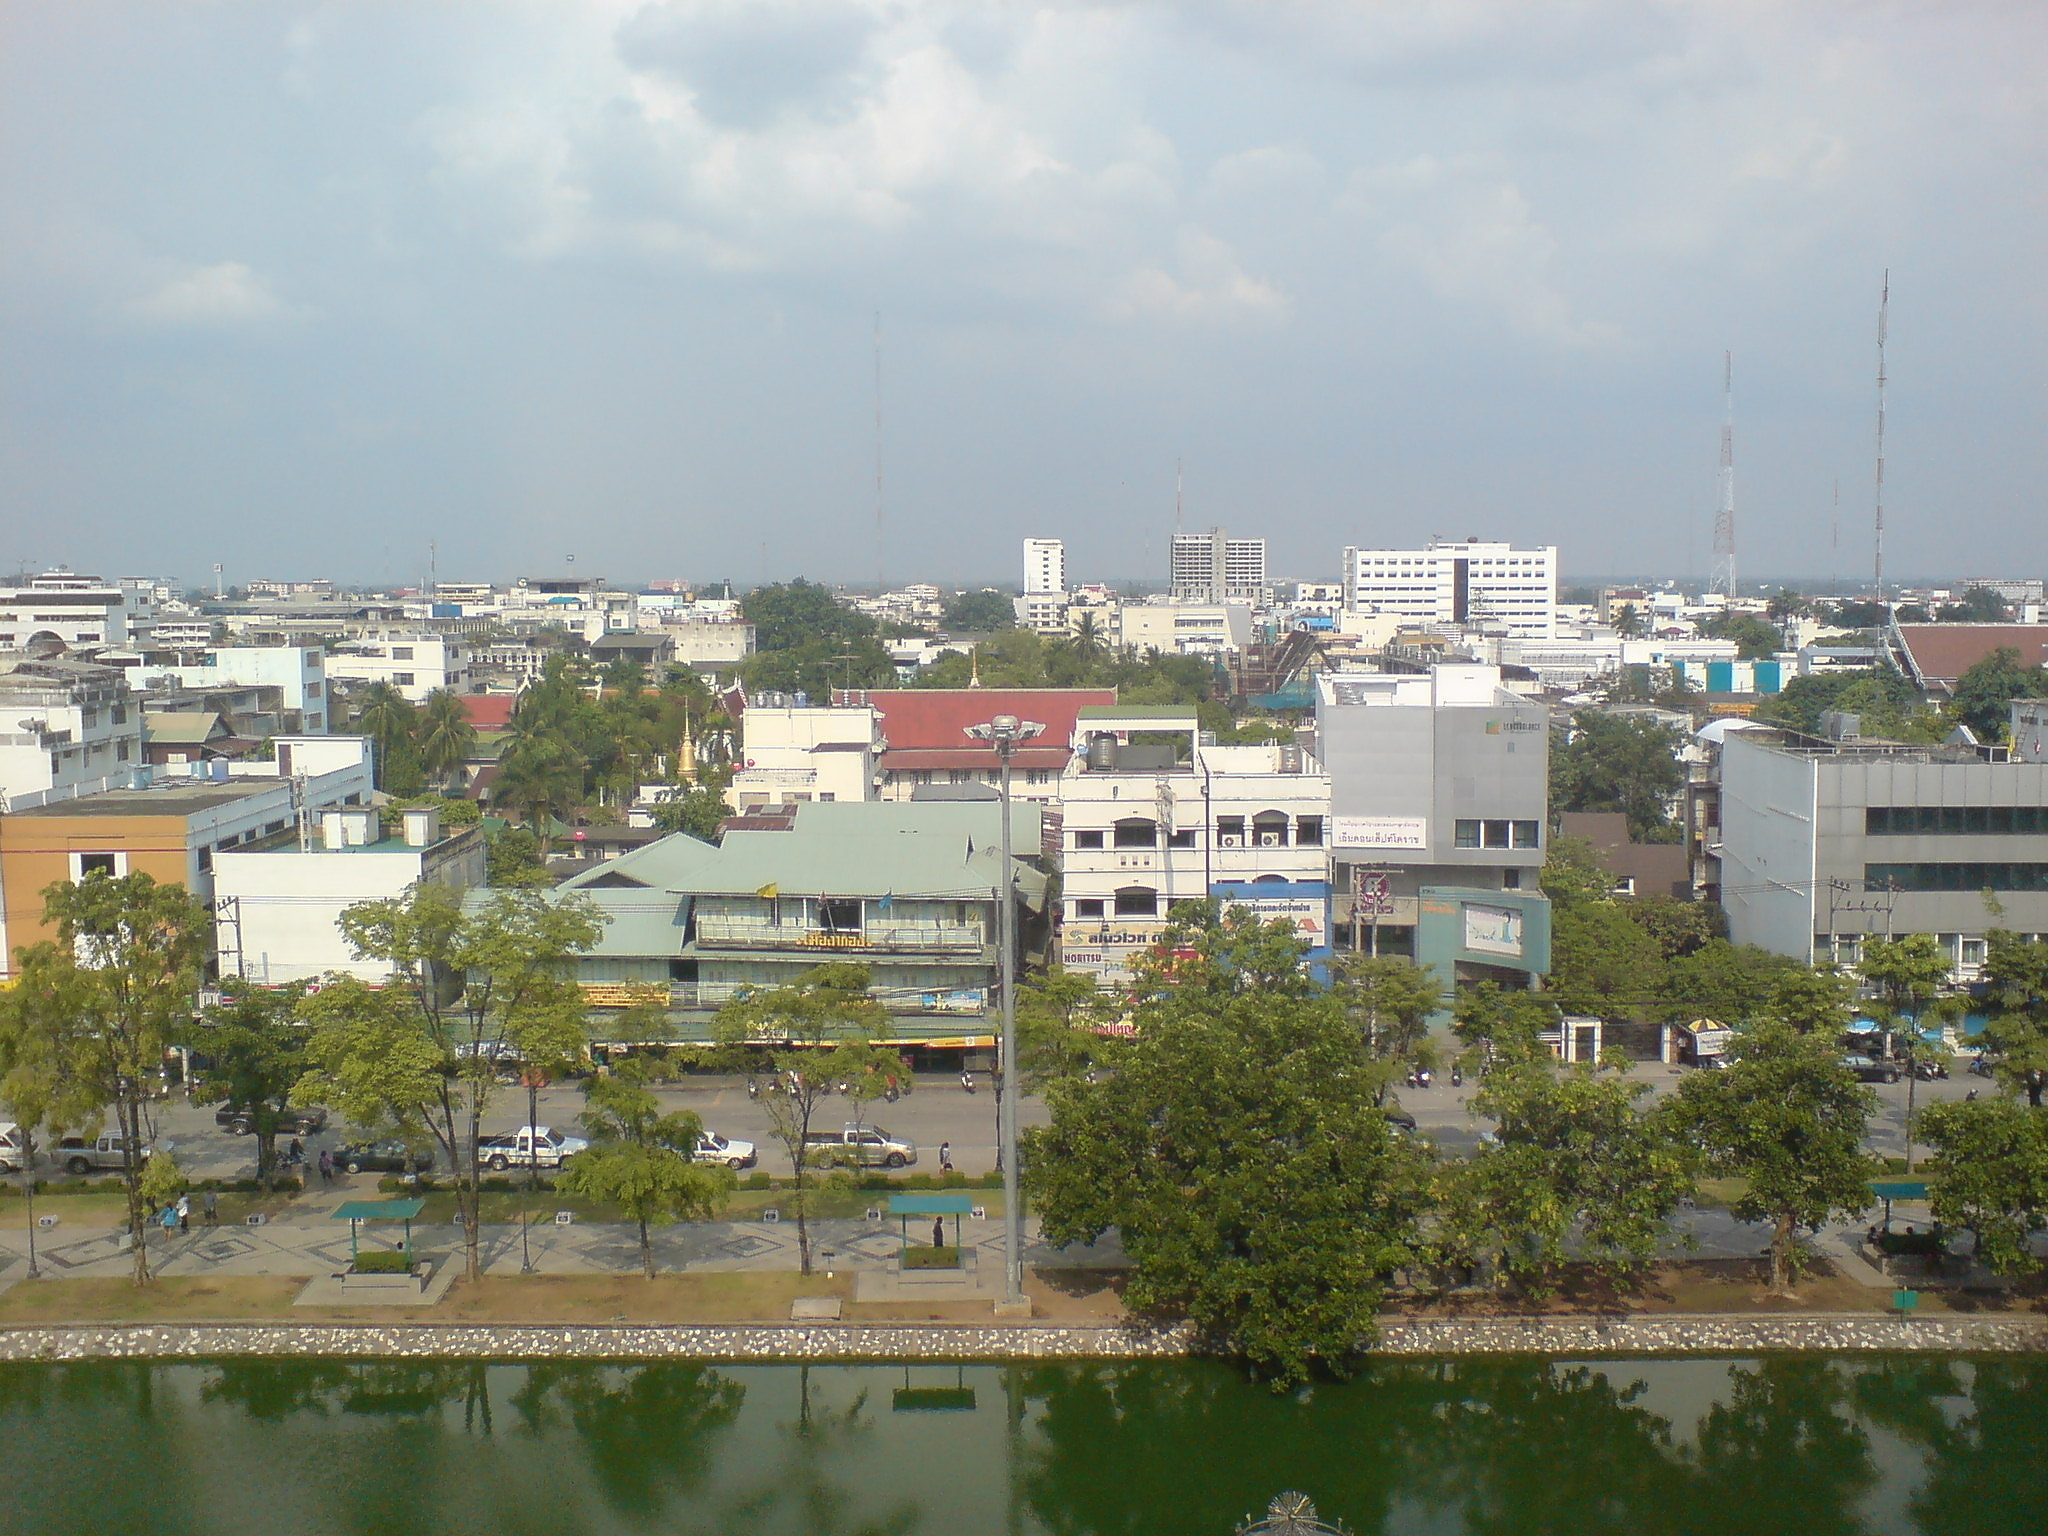 Nakhon Ratchasima, Thailand